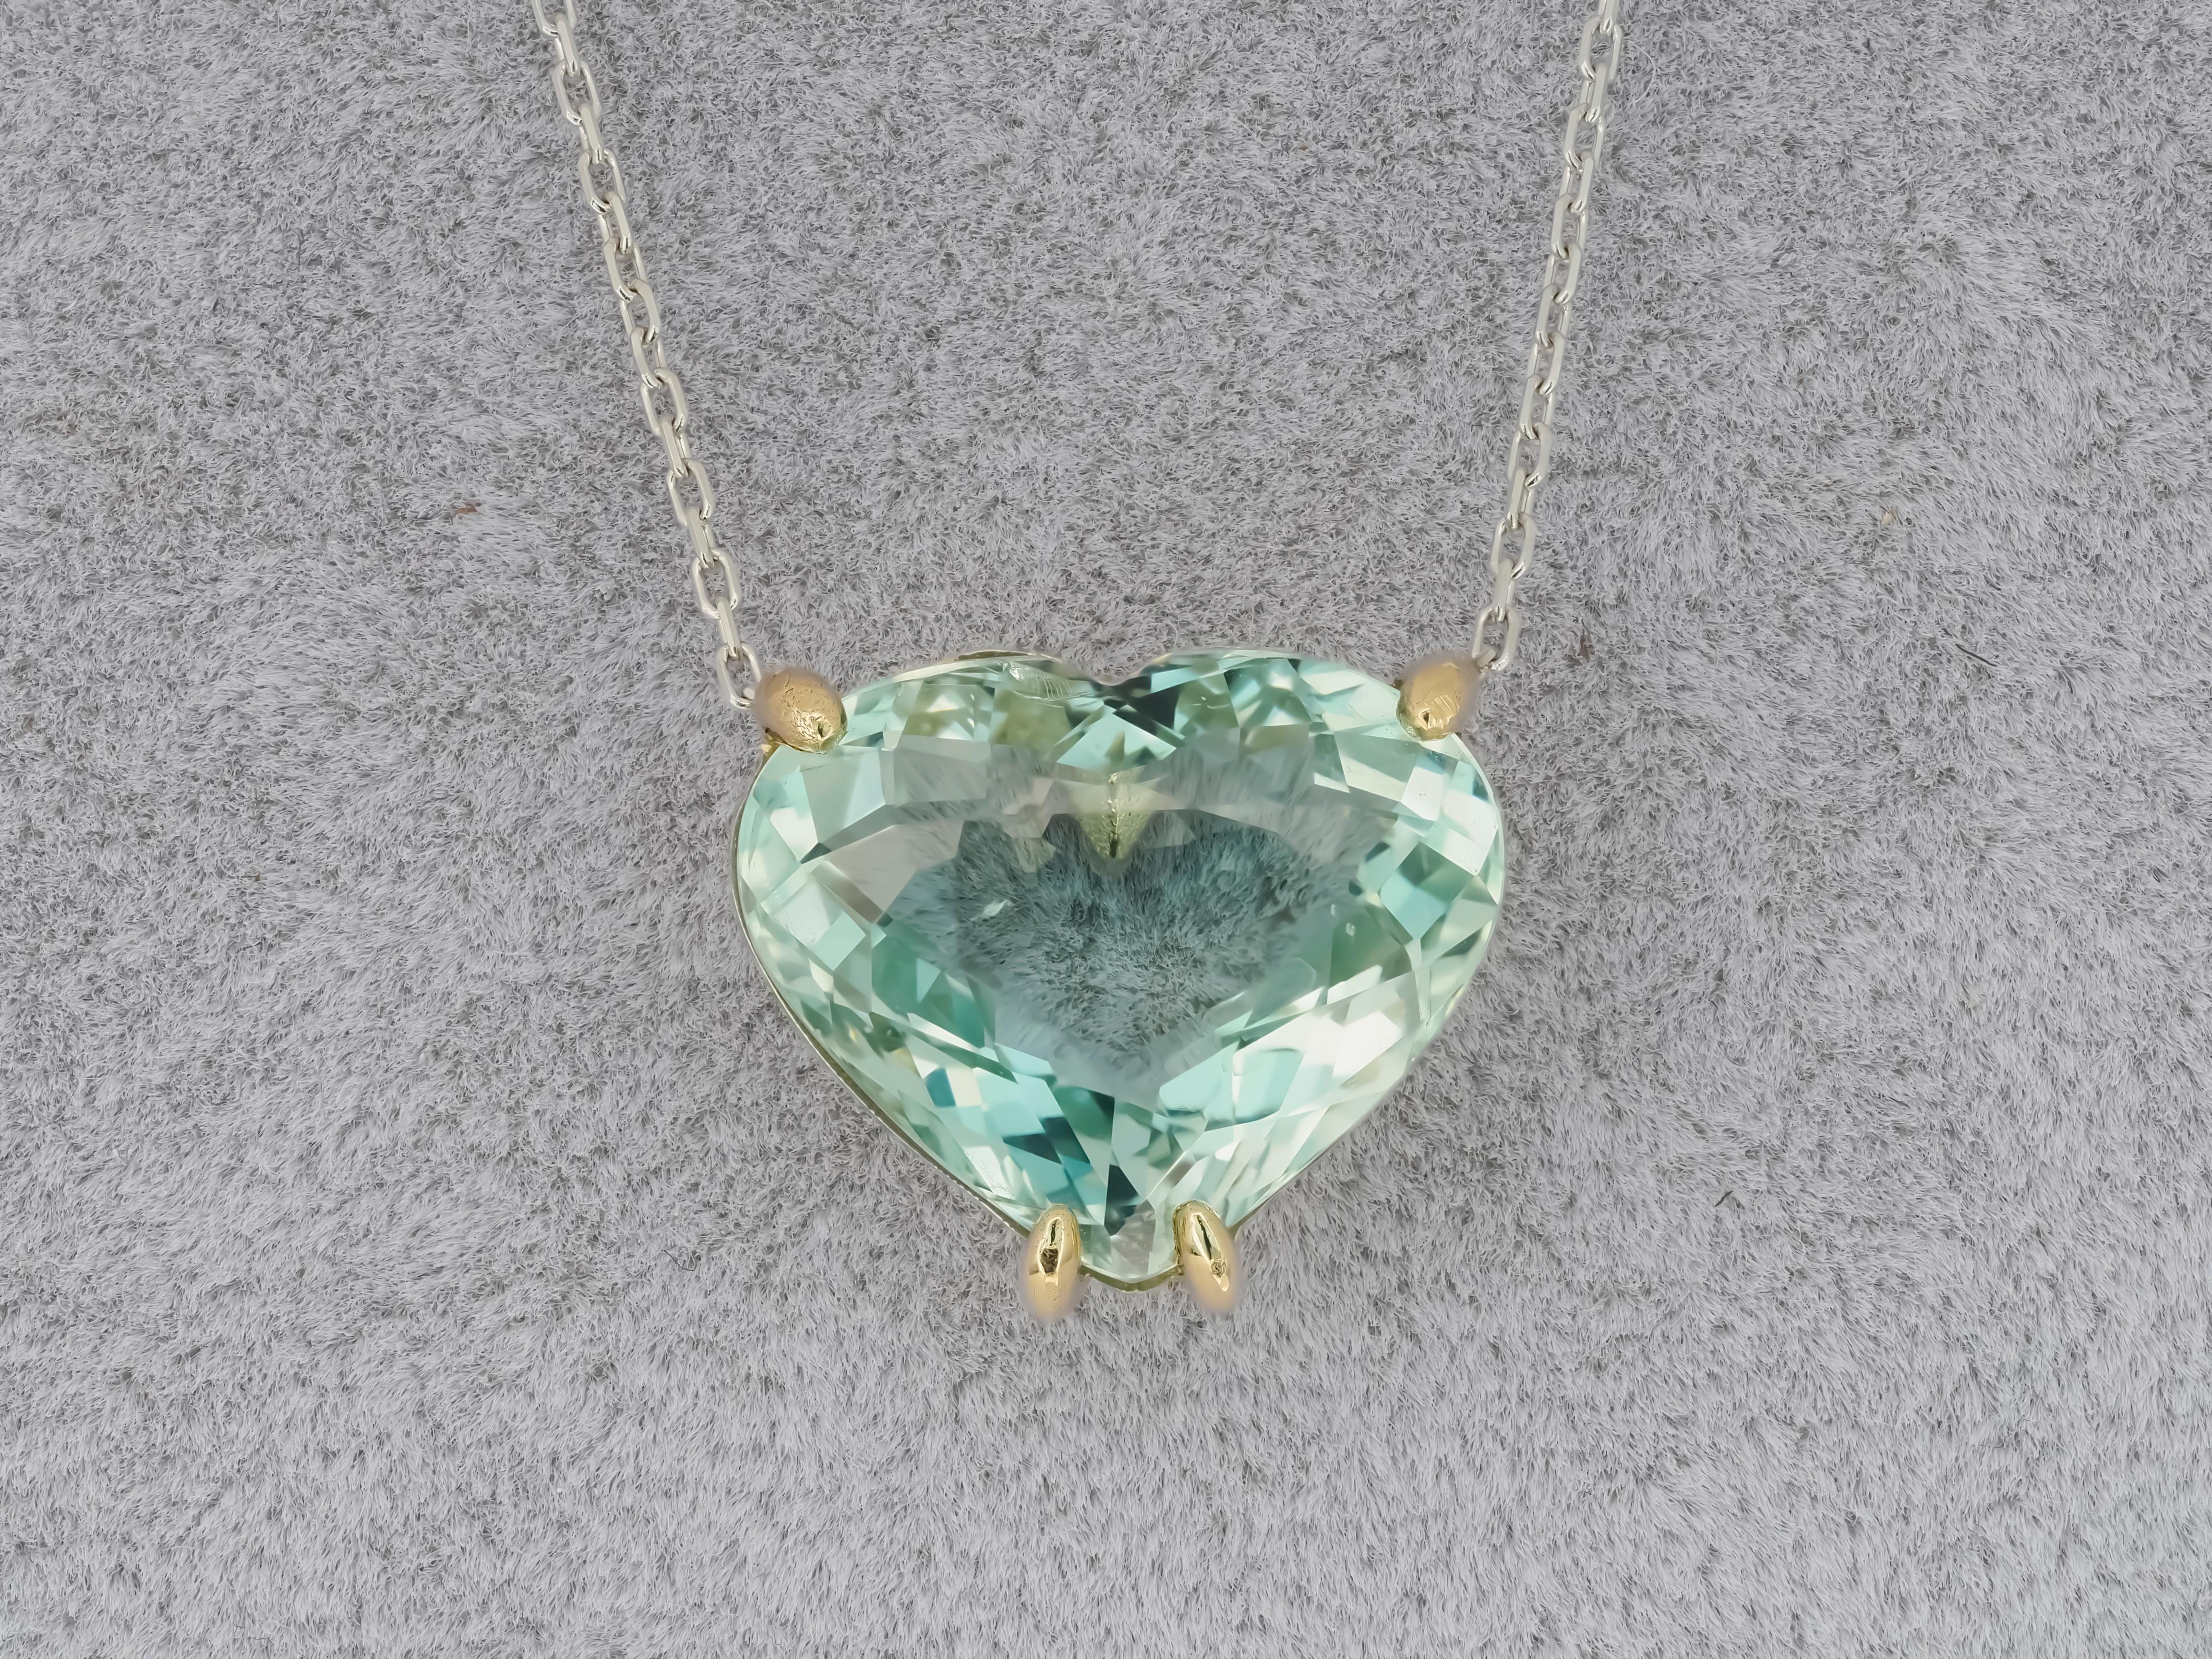 Heart Shaped Aquamarine Pendant Necklace in 14k White Gold 3